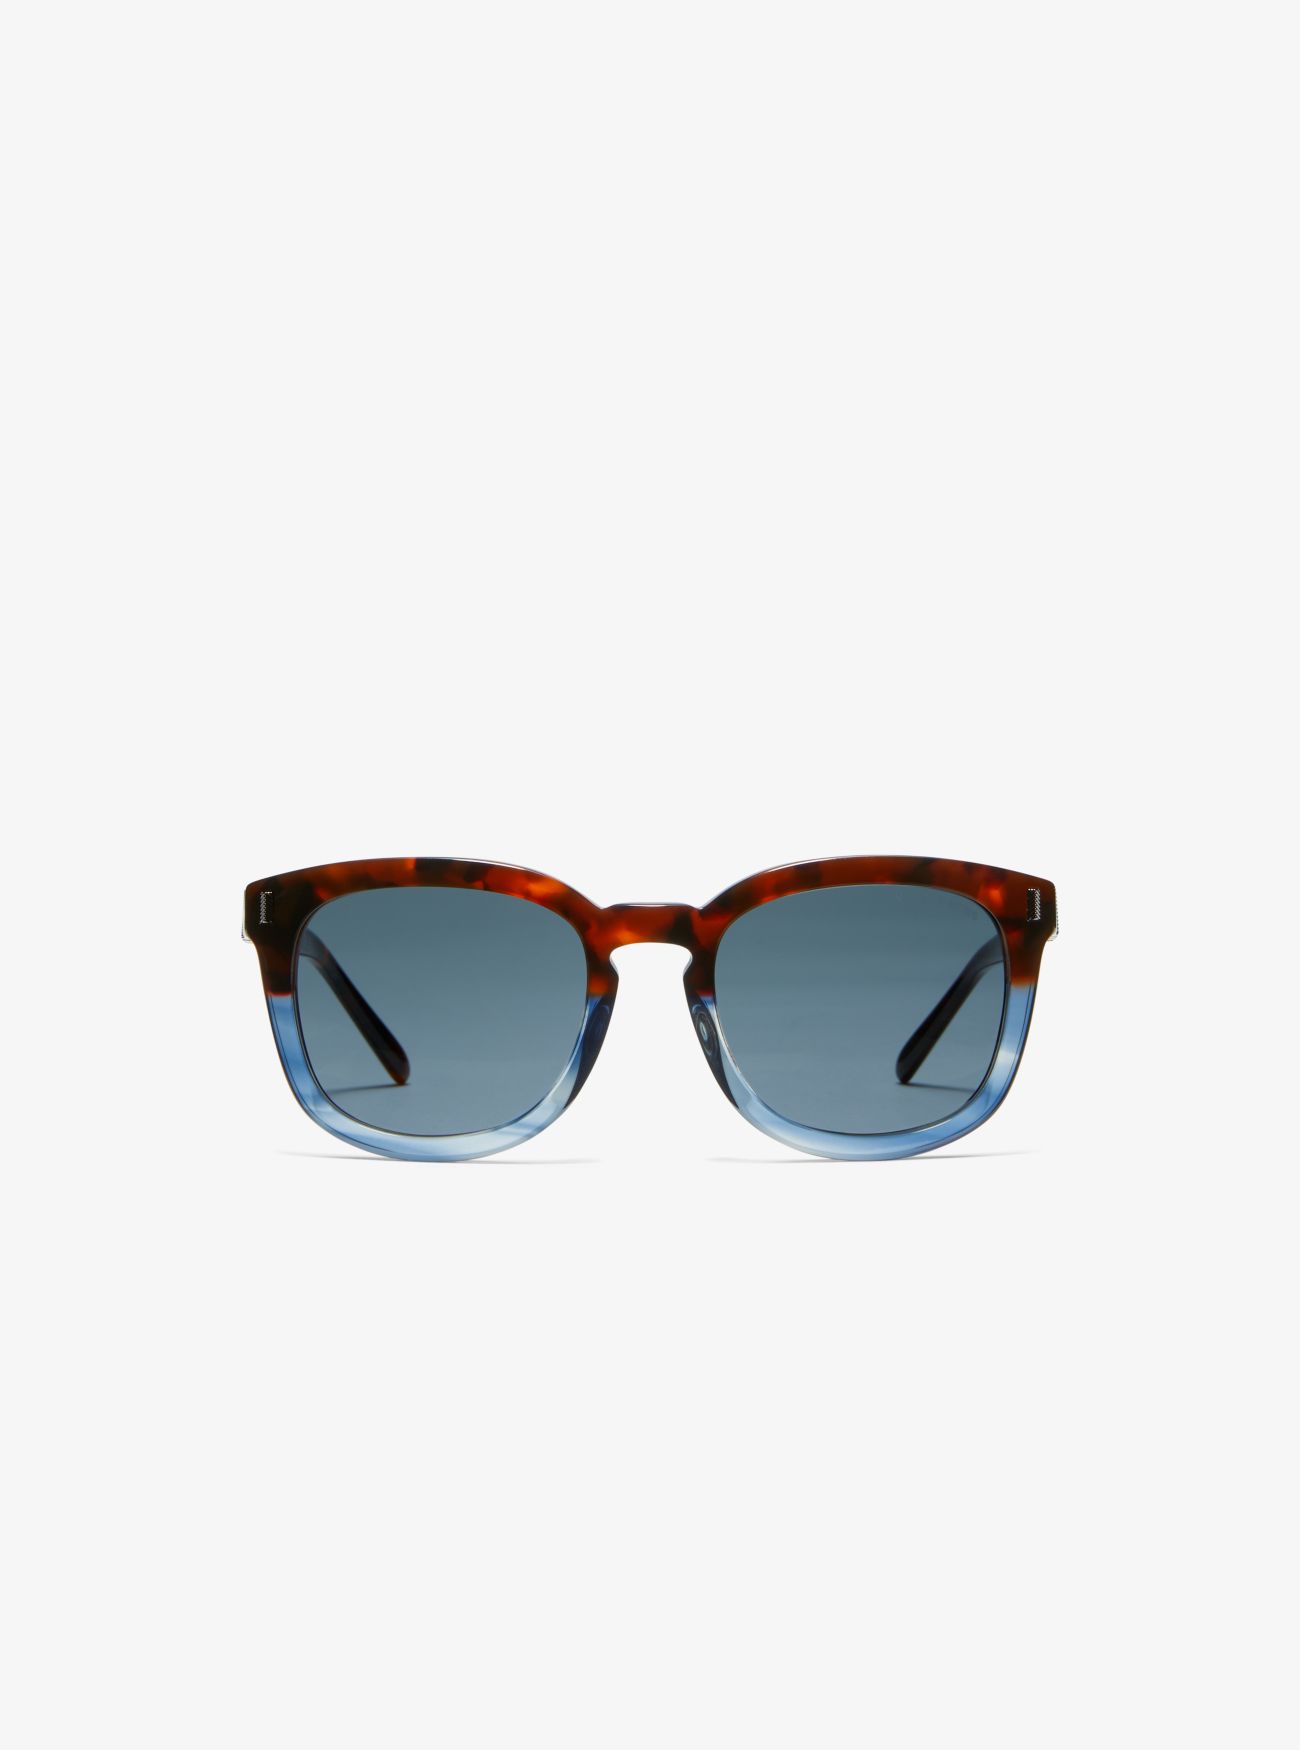 MK Grand Teton Sunglasses - Brown/navy - Michael Kors